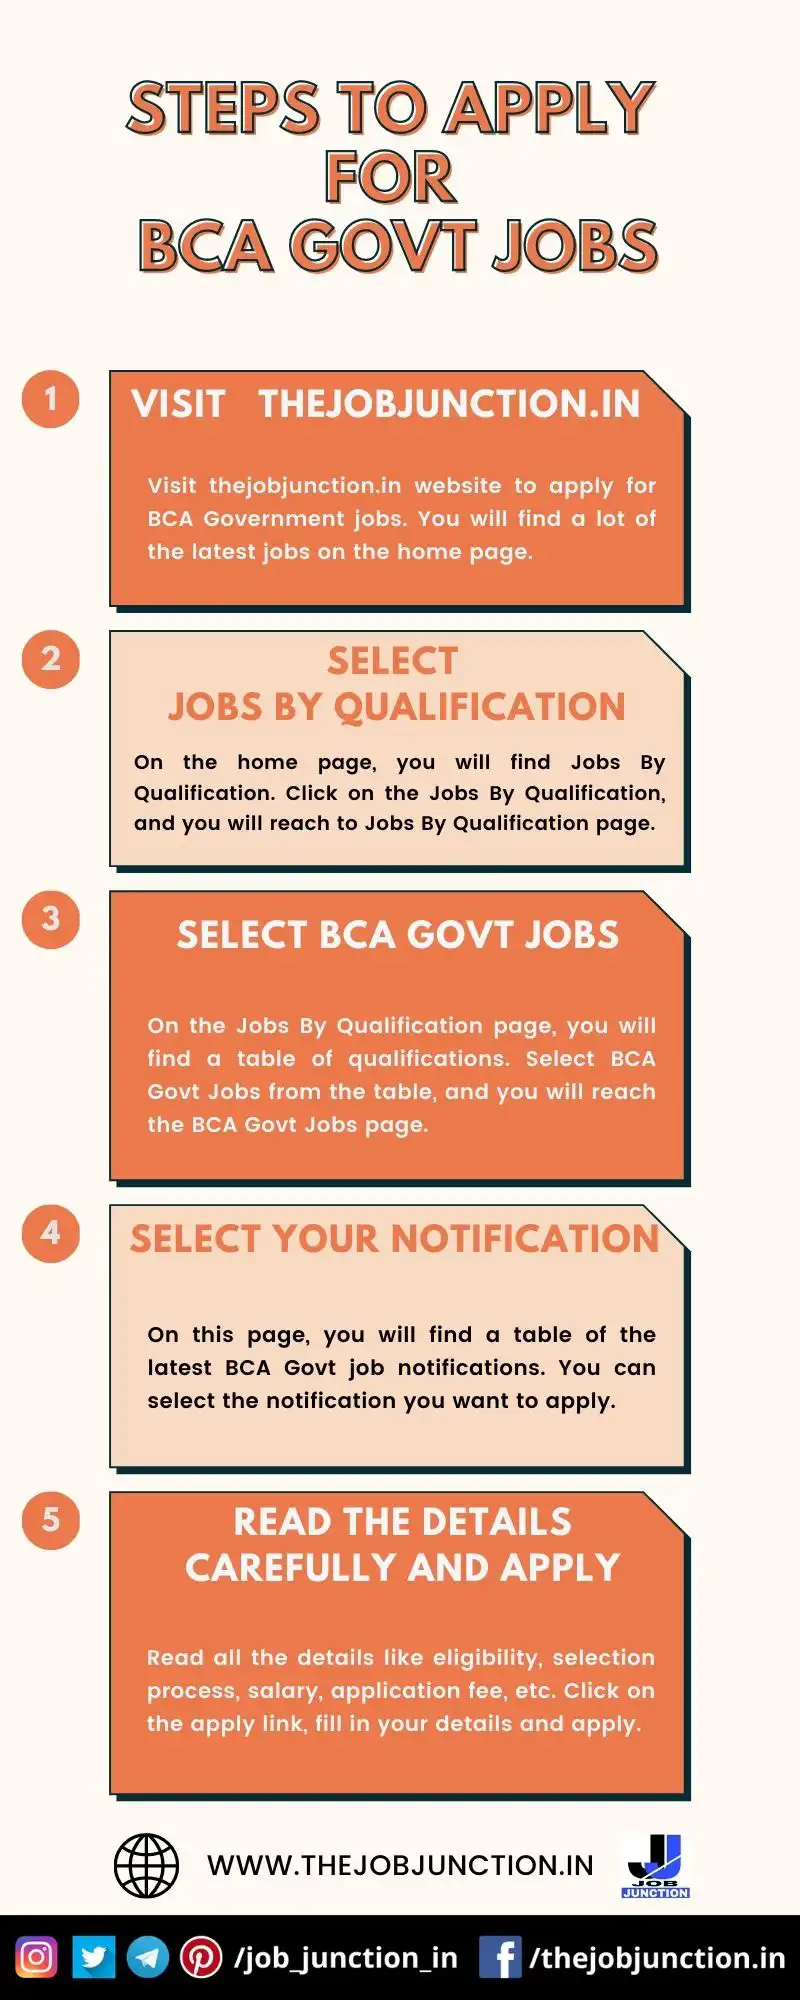 STEPS TO APPLY FOR BCA GOVT JOBS